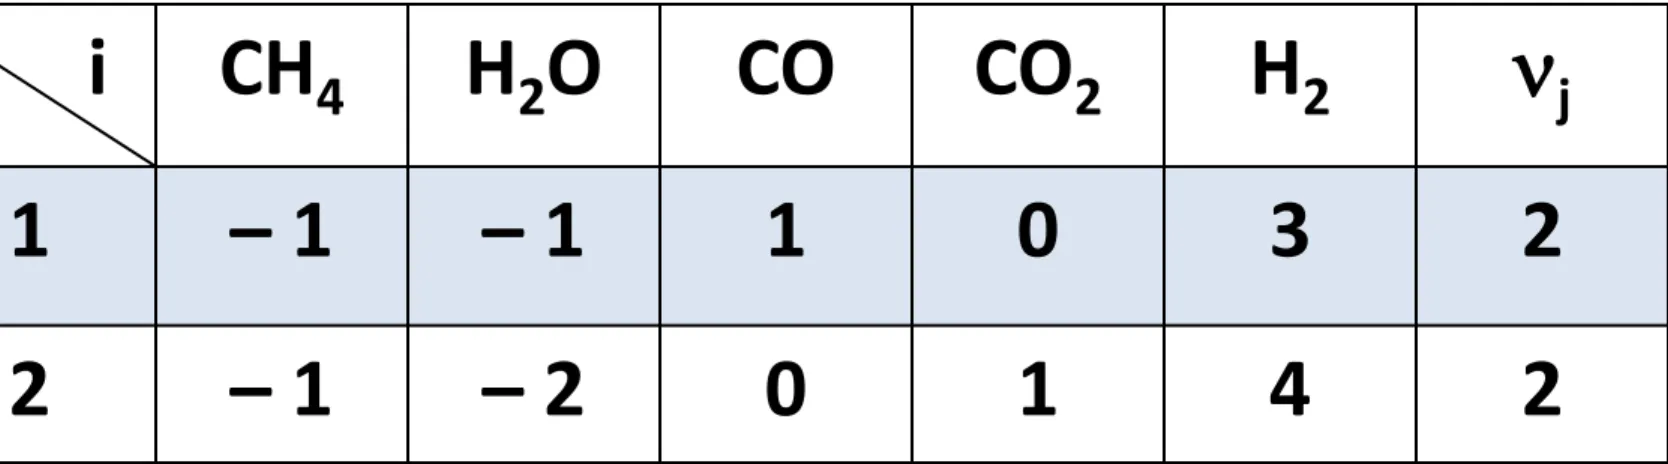 Tabel bilangan stoikiometri: 